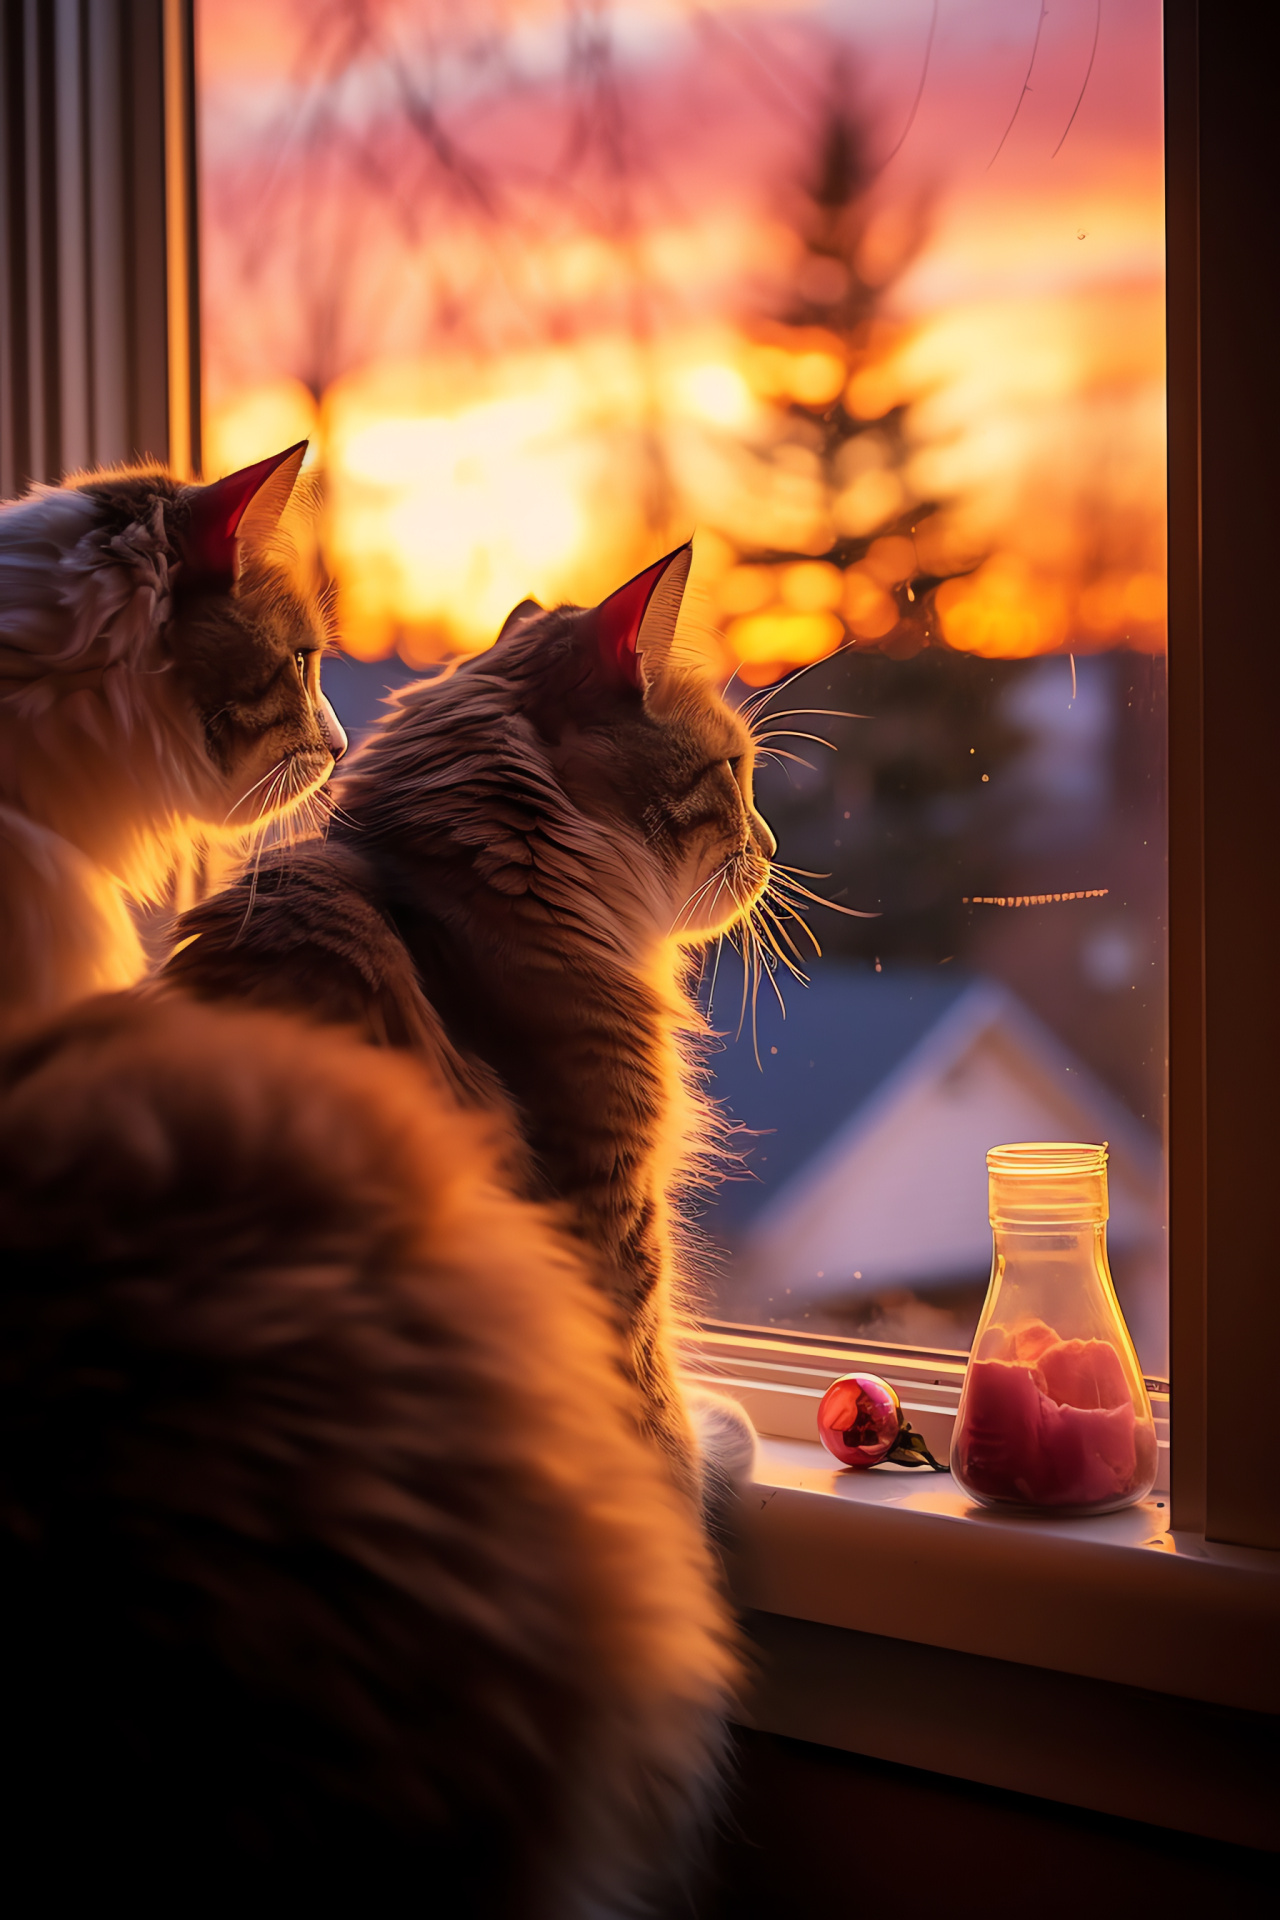 Love-themed felines, Domestic pets, Window perch, Evening glow, Warm hues, HD Phone Image